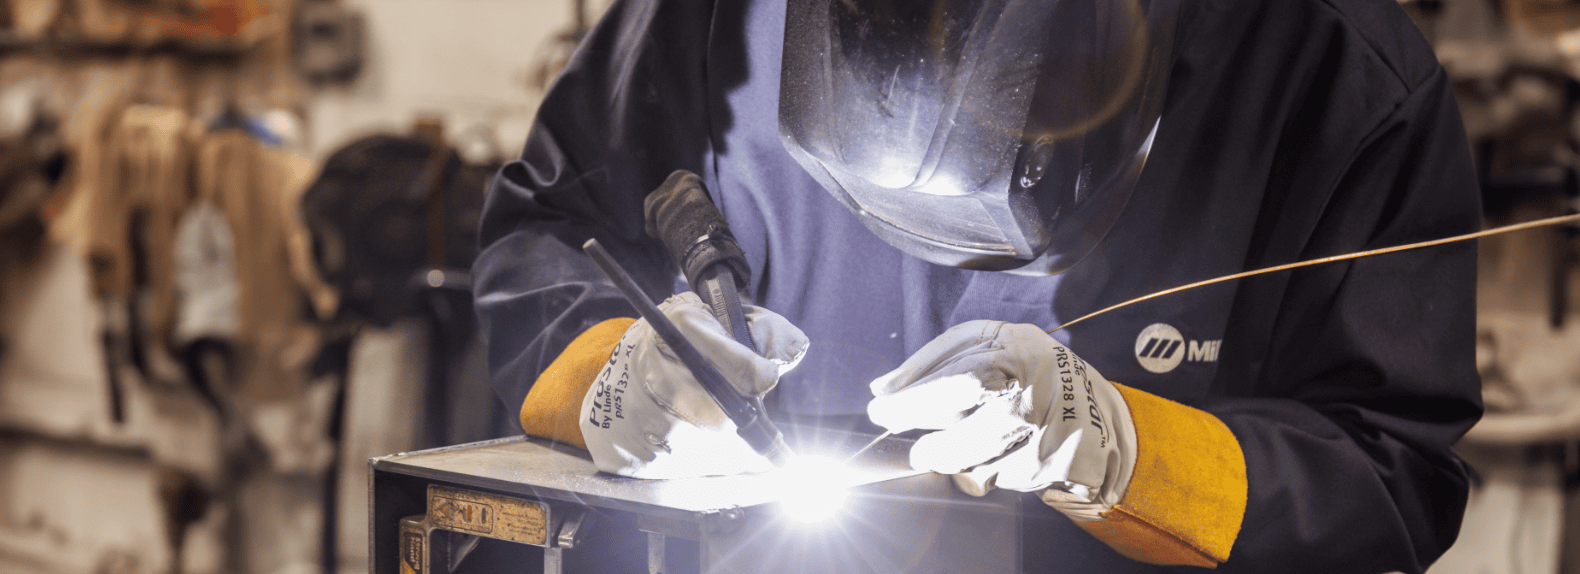 man wearing welding mask welding metal pieces together with welding tools in hand